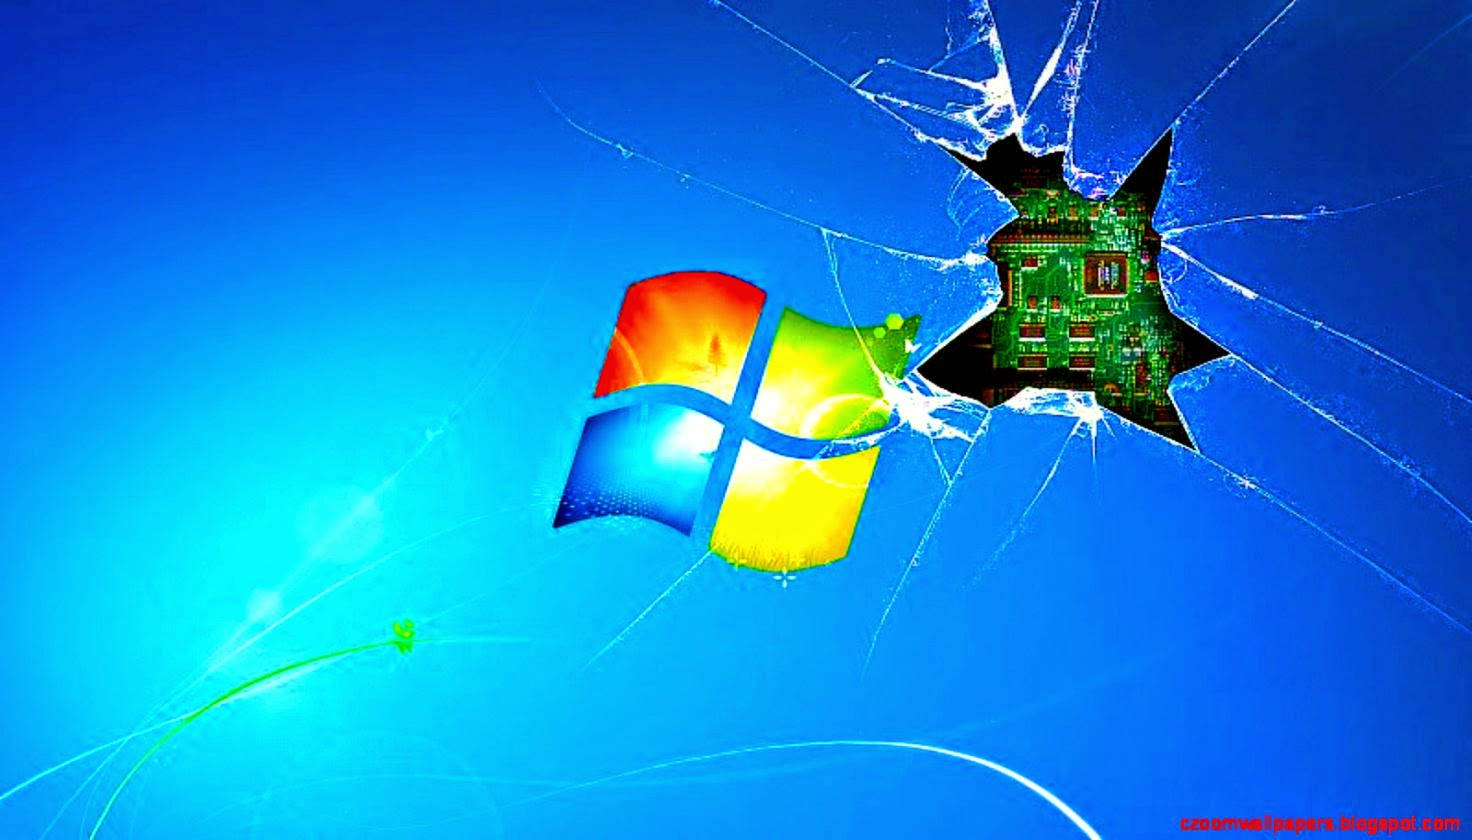 Windows 7 Browser Crashed Wallpaper